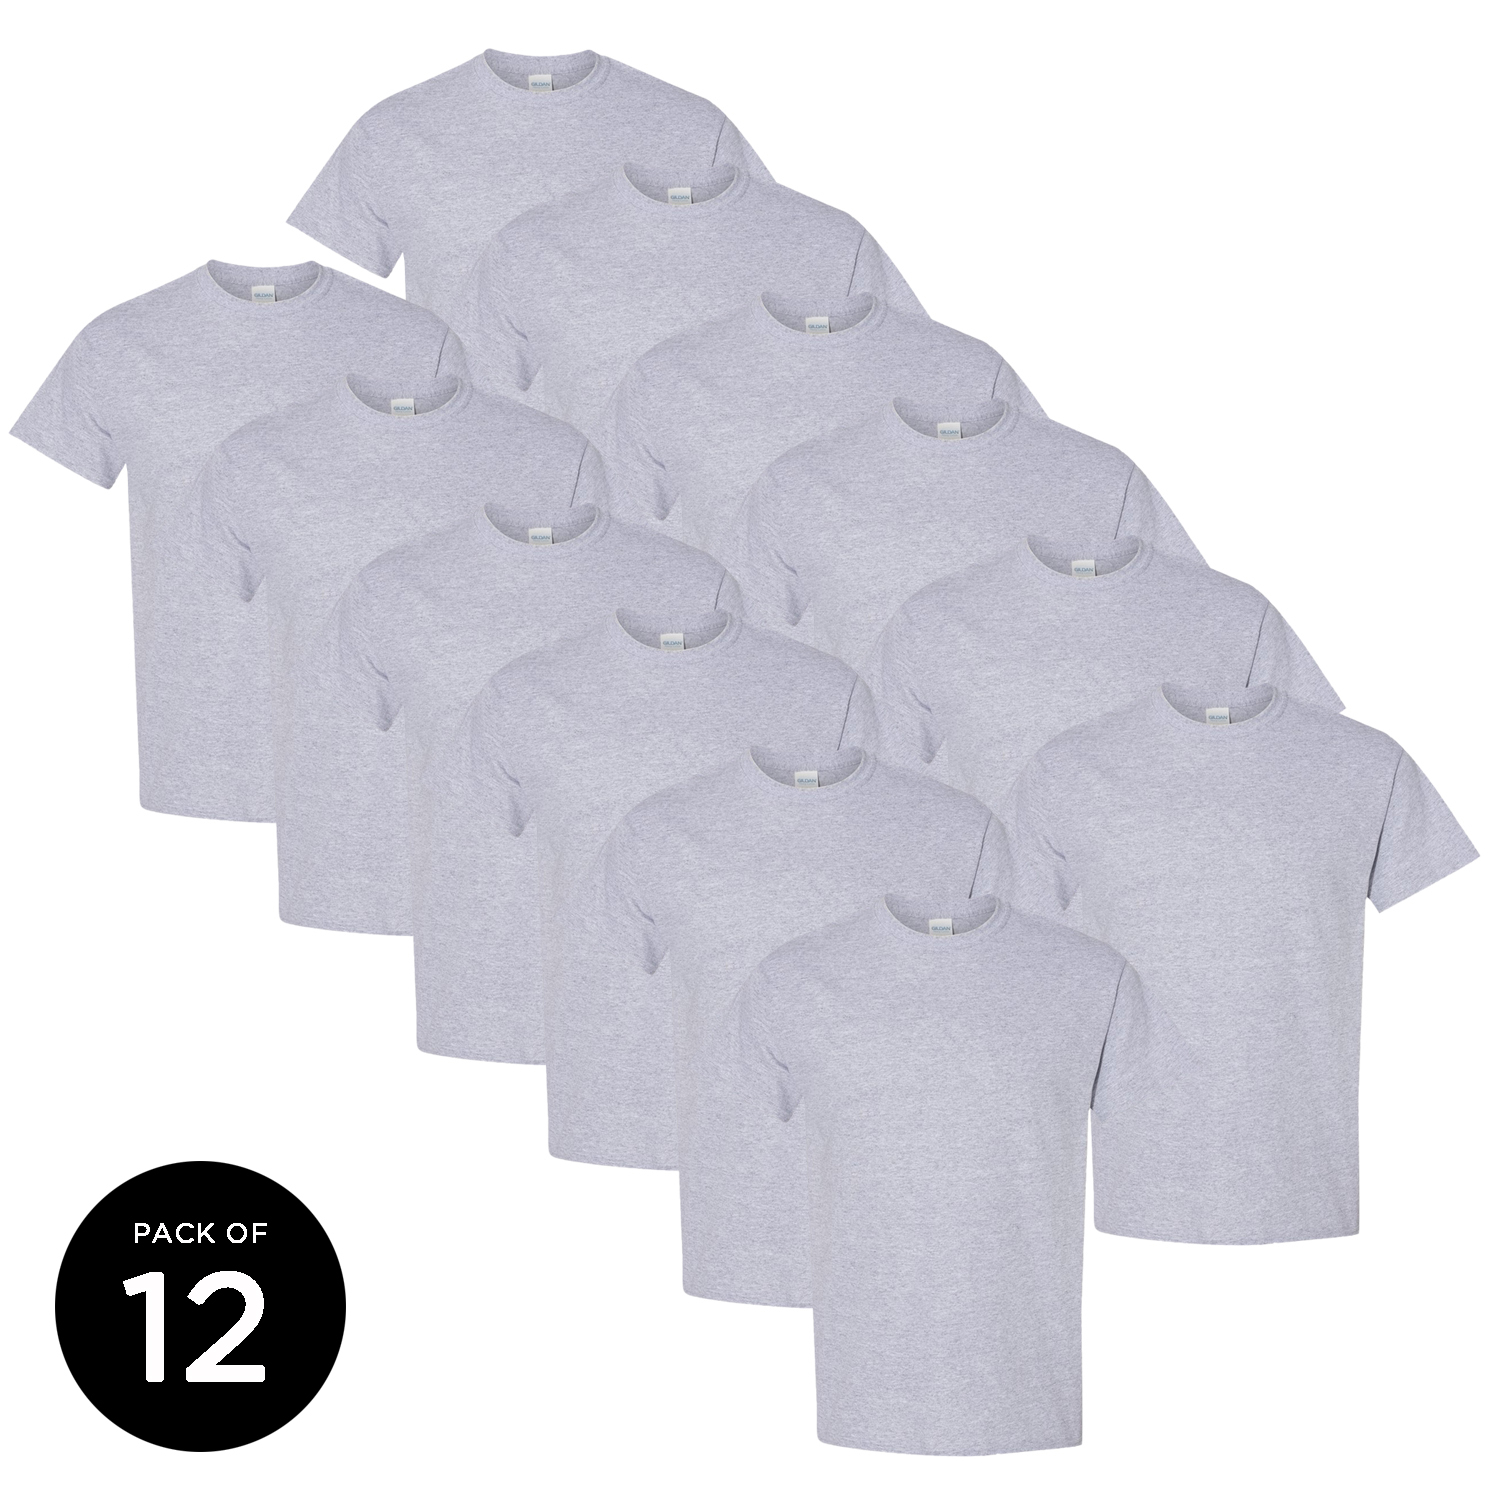 Gildan Men Grey T-Shirts Value Pack Shirts for Men - Single OR Pack of 6 OR Pack of 12 Grey Shirts for Men Gildan T-shirts for Men Gray T-shirt Casual Shirt Basic Shirts - image 1 of 4